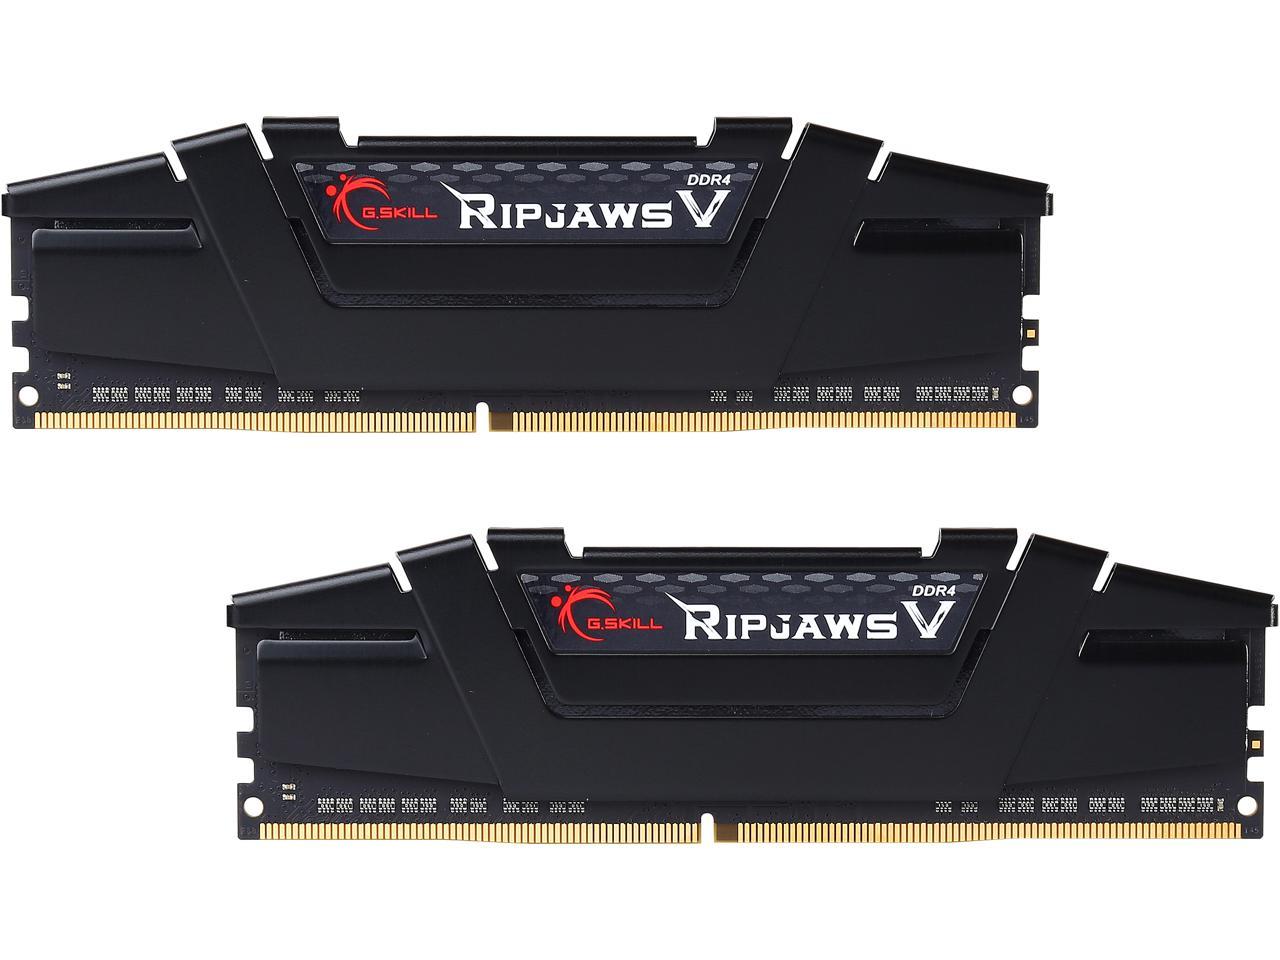 16GB (2x 8) G.SKILL Ripjaws V Series DDR4 3600 Desktop RAM kit @Newegg $55